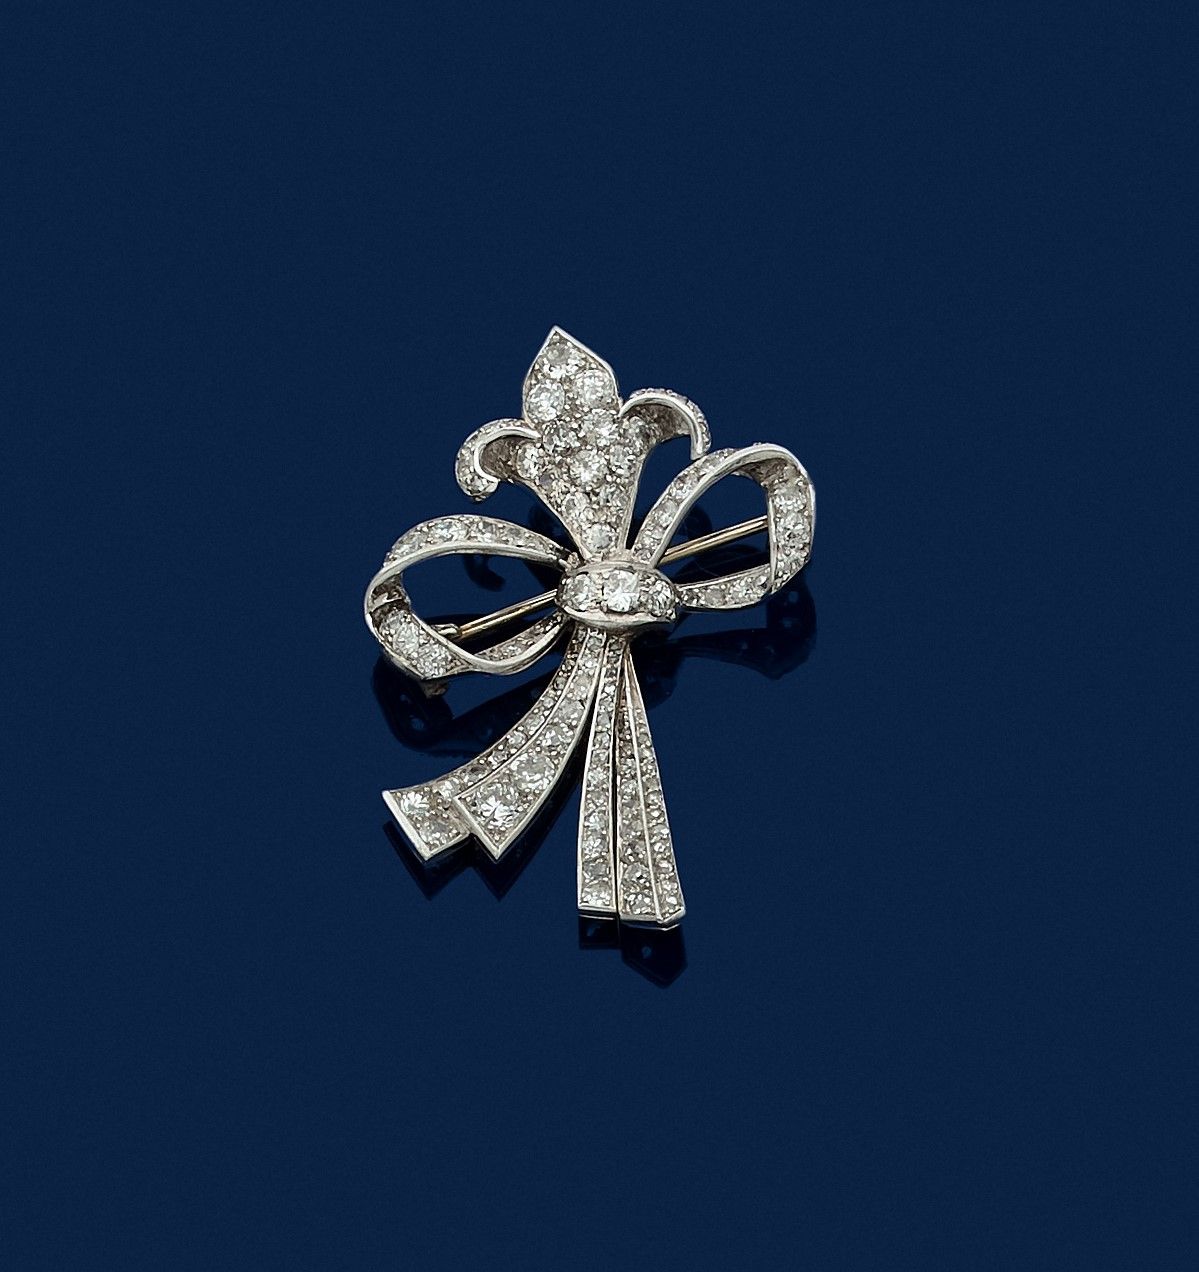 Null 一枚铂金胸针，在一个丝带结中画着一朵百合花，上面镶嵌着8/8和老式切割钻石。高度：约4.2厘米。毛重 : 9,7 g

镶嵌钻石的胸针